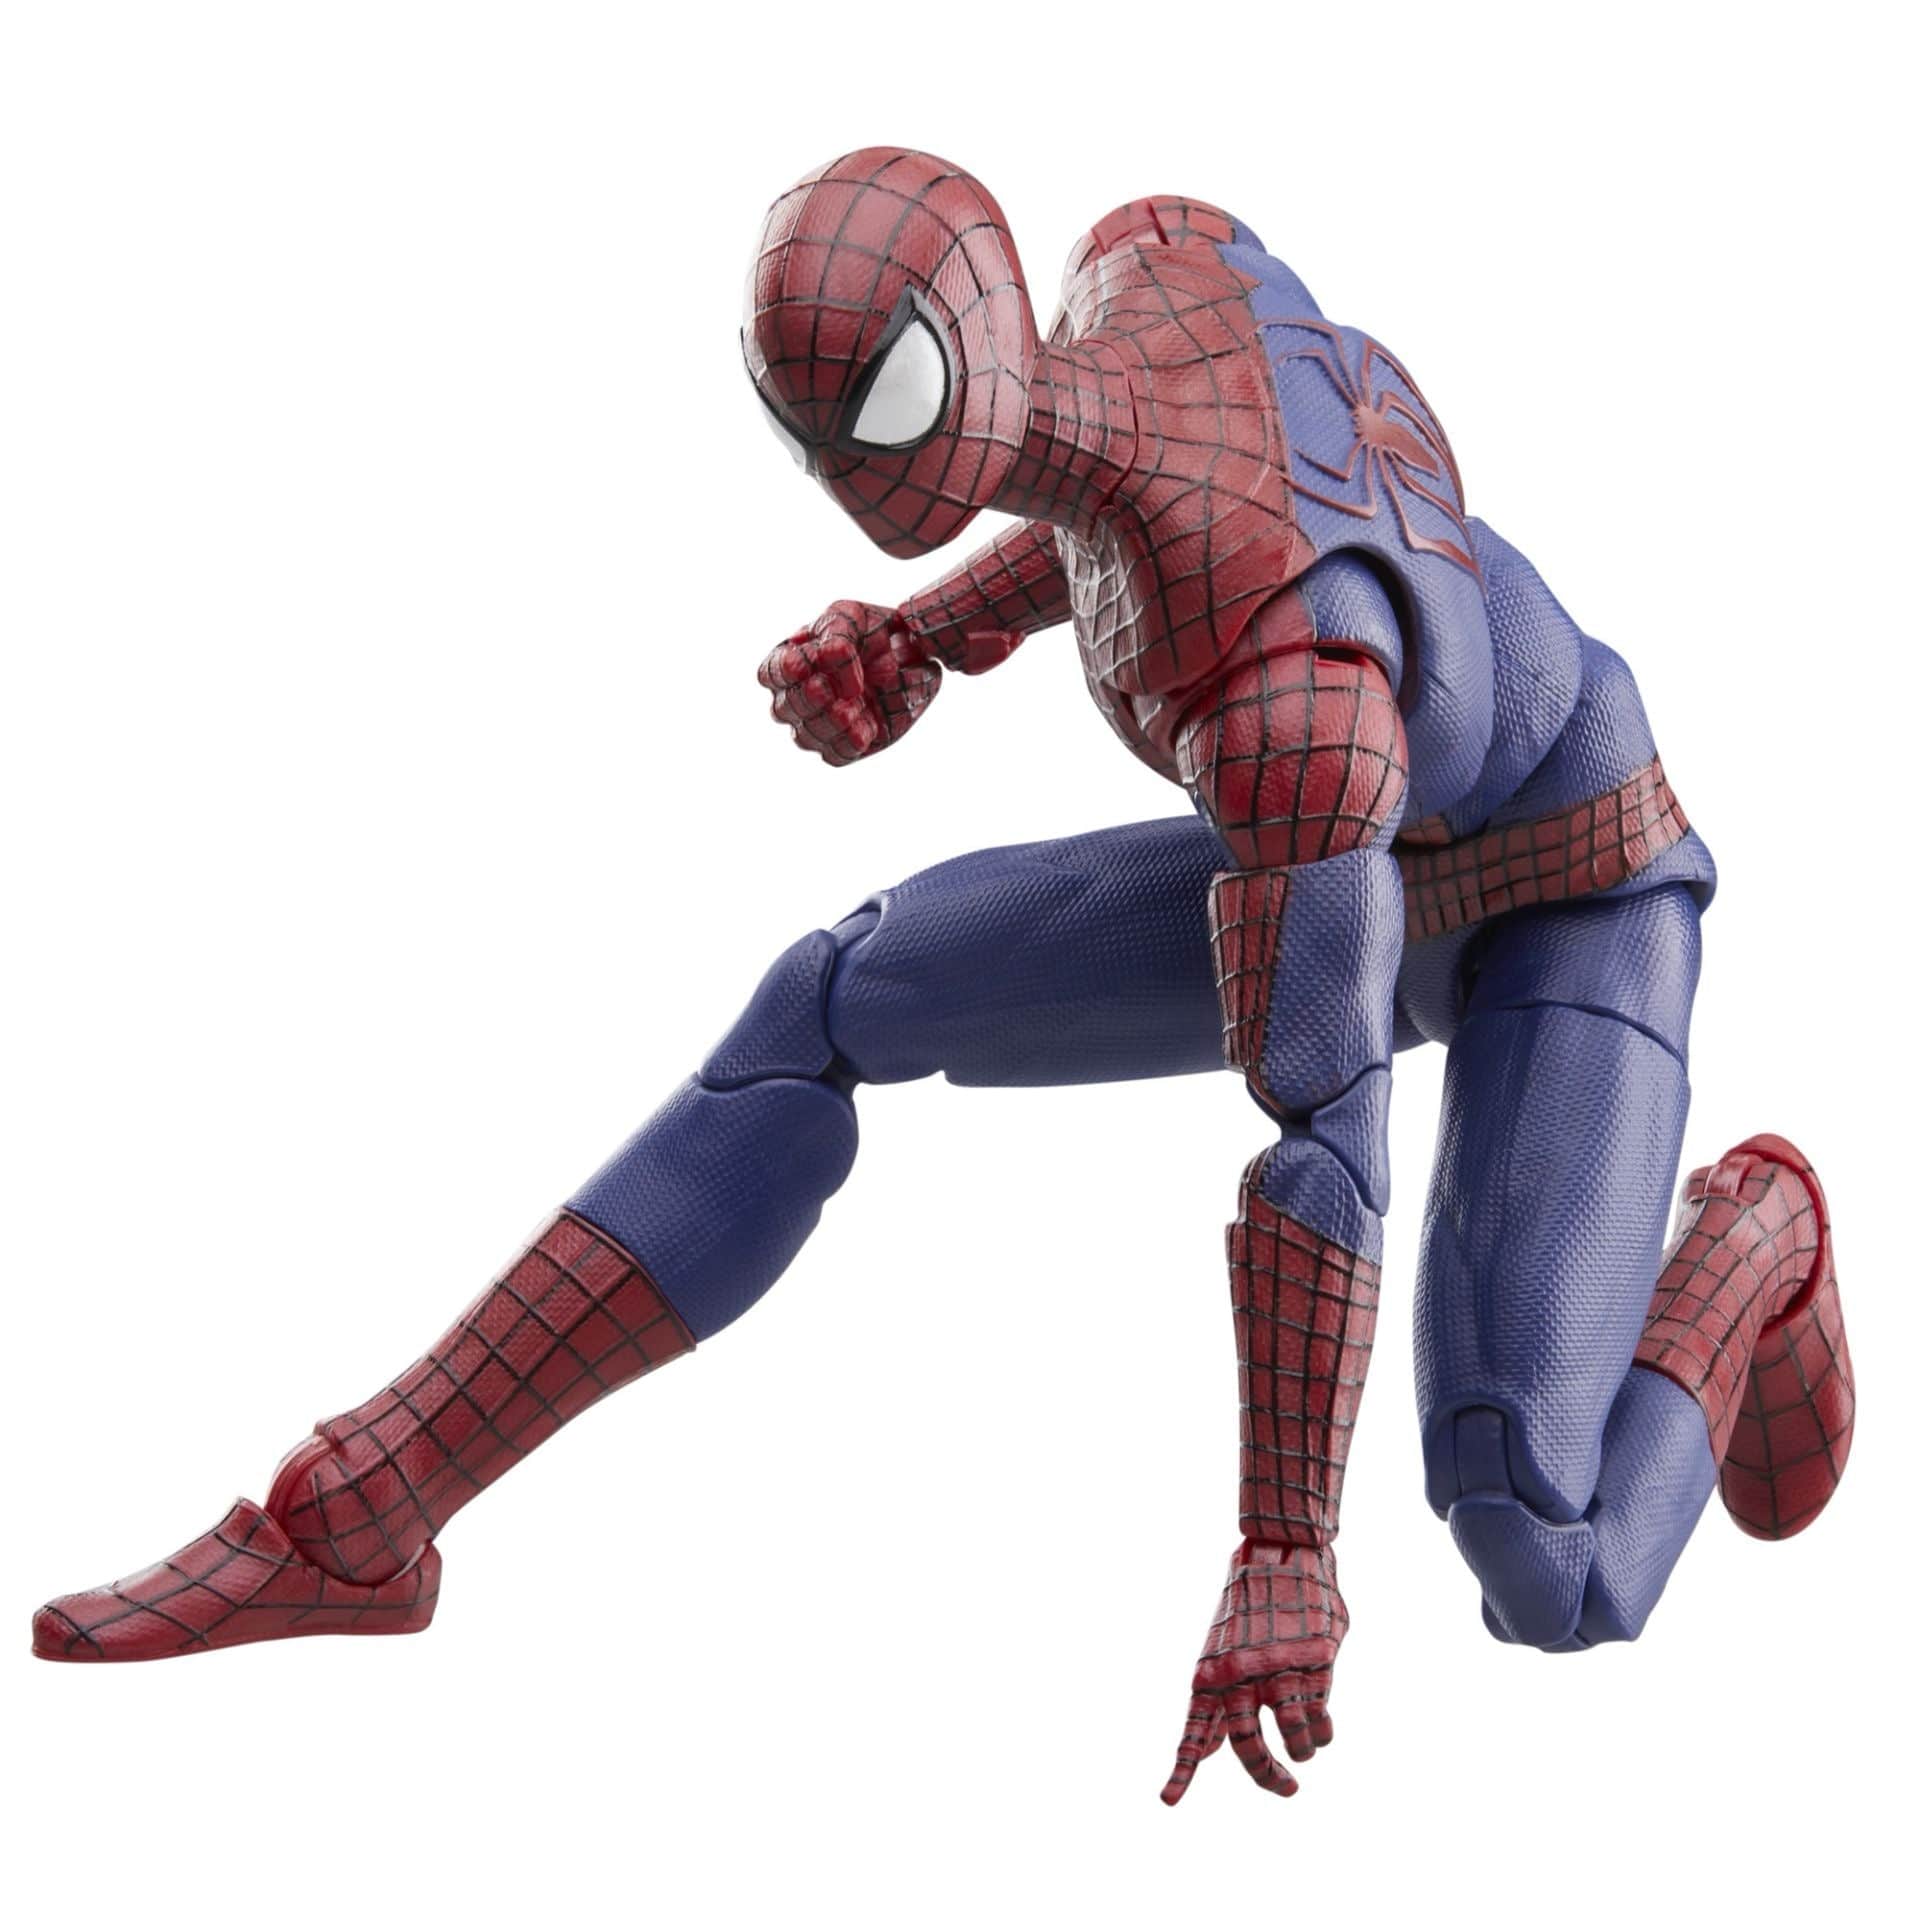 Hasbro Marvel Legends Series The Amazing Spider-Man 2 Spider-Man Action Figure